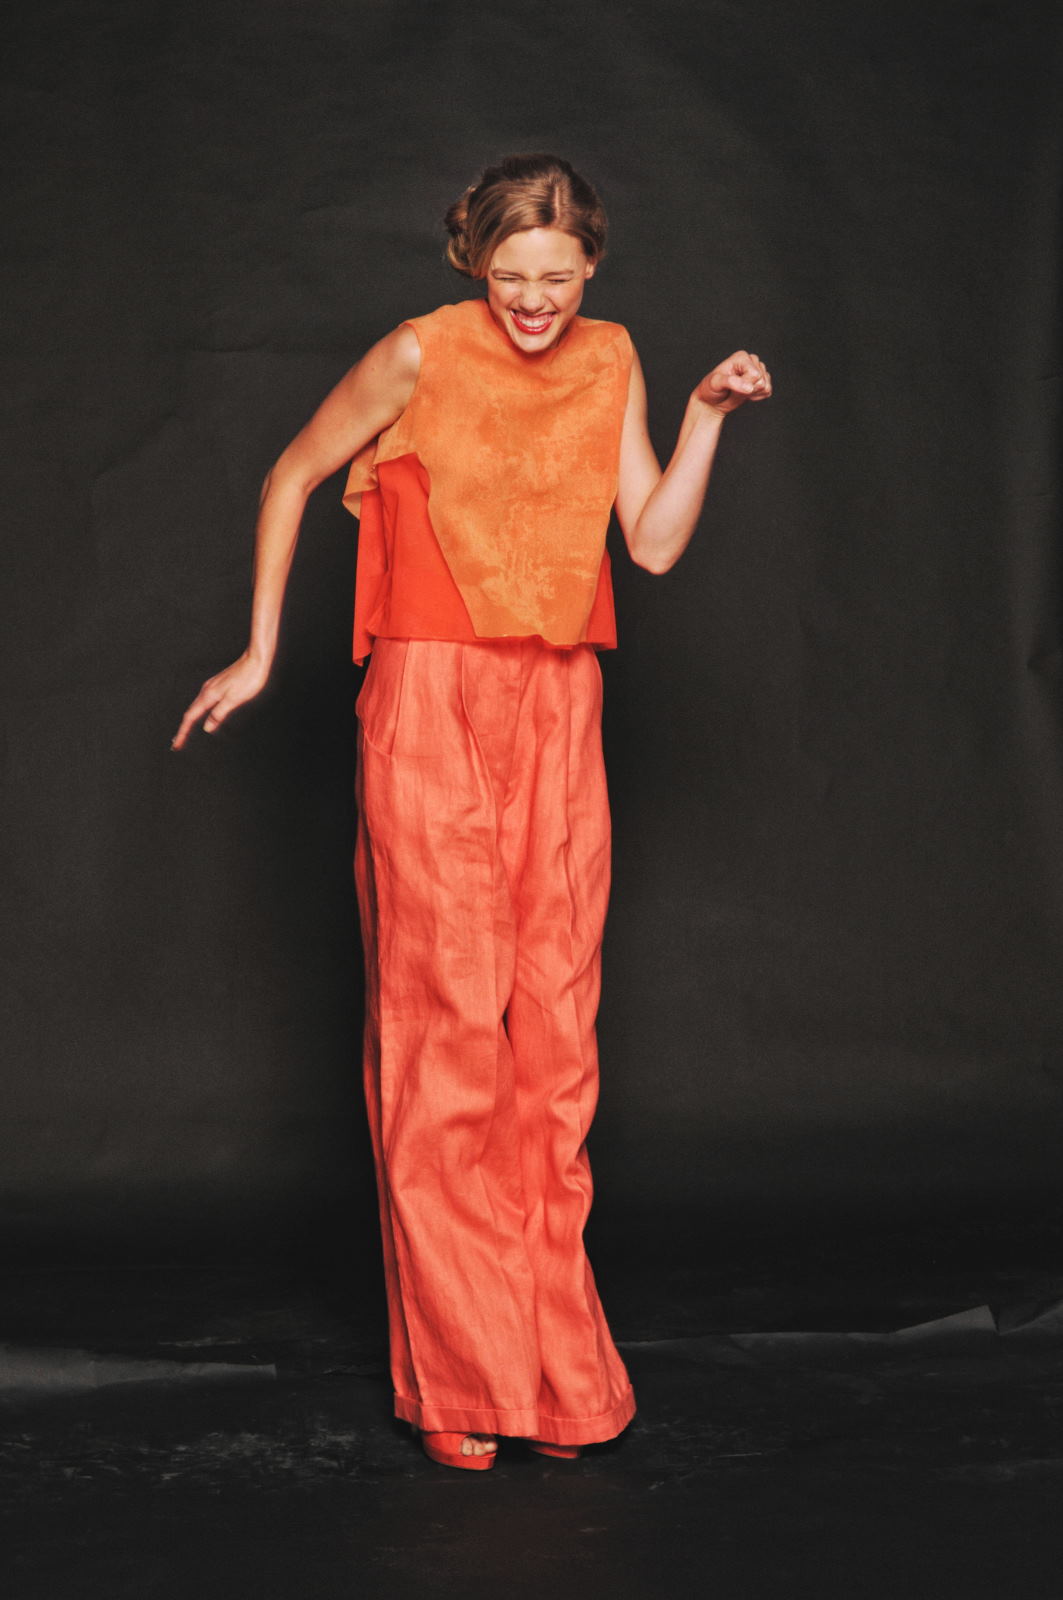 JUMP! Sydney Couture Studio Shoot, custom print orange fashion fabrics. Photography by Kent Johnson